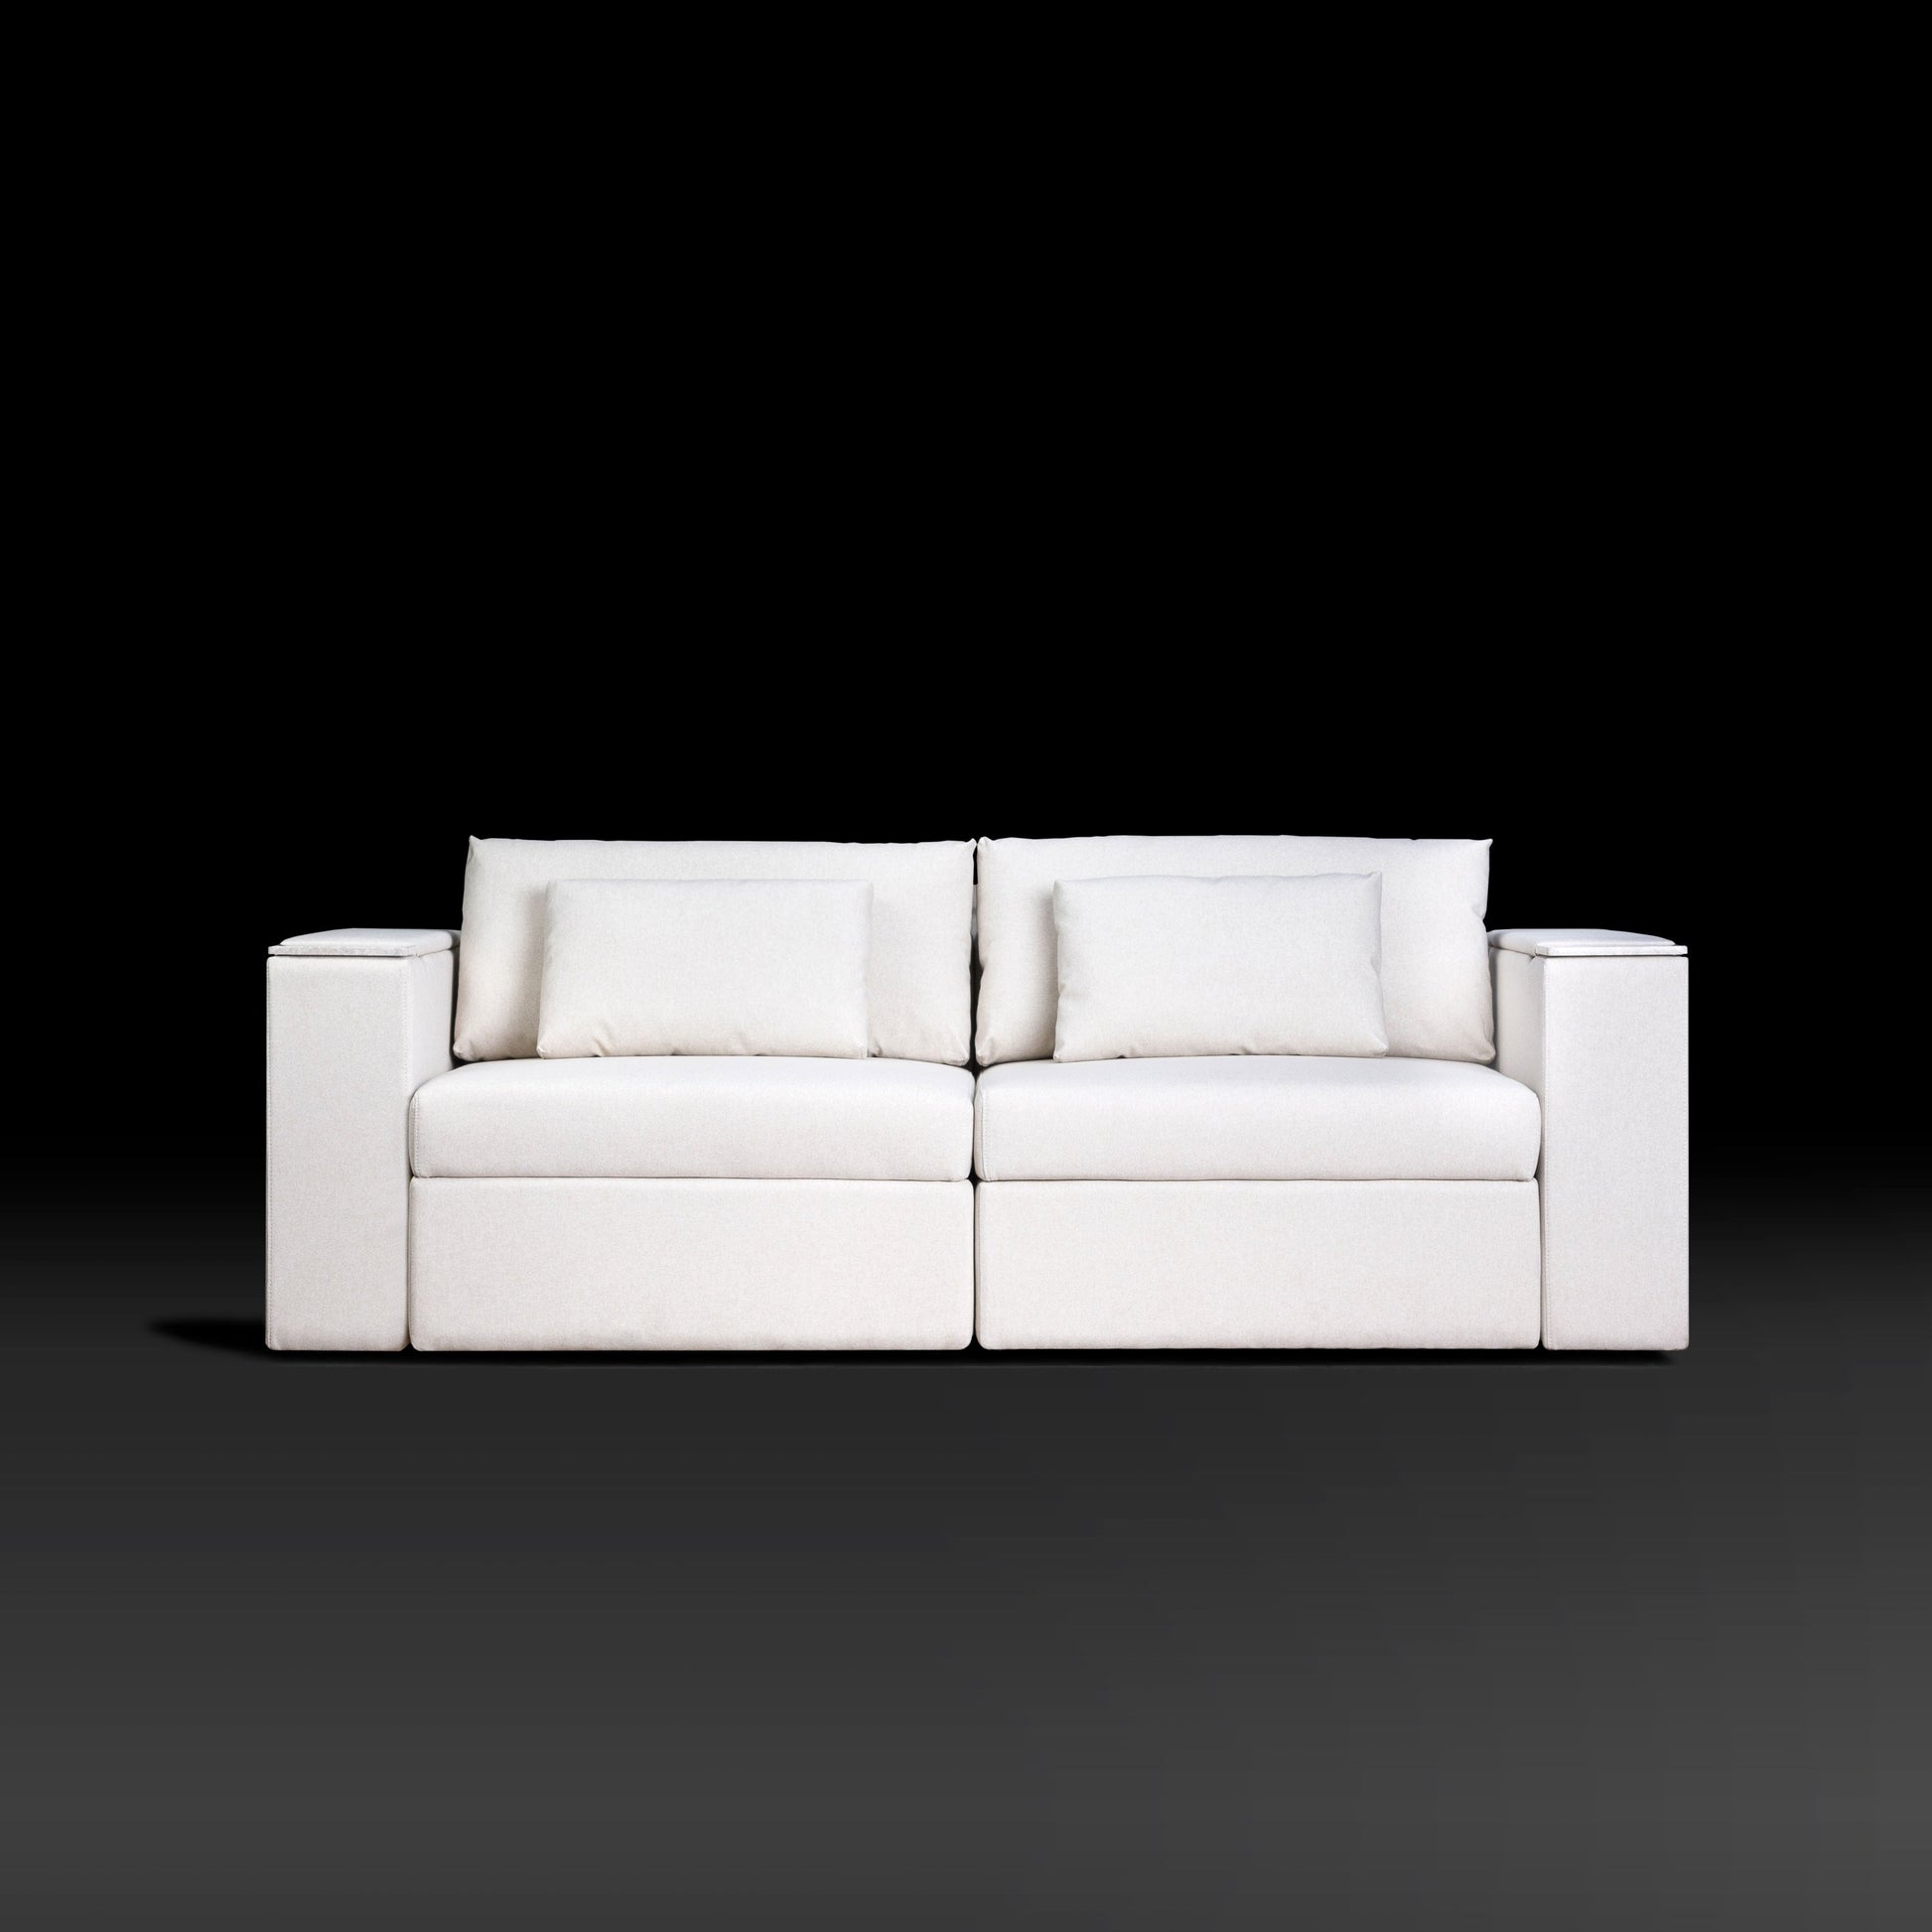 Rezy Design Two-Seater Modular Sofa